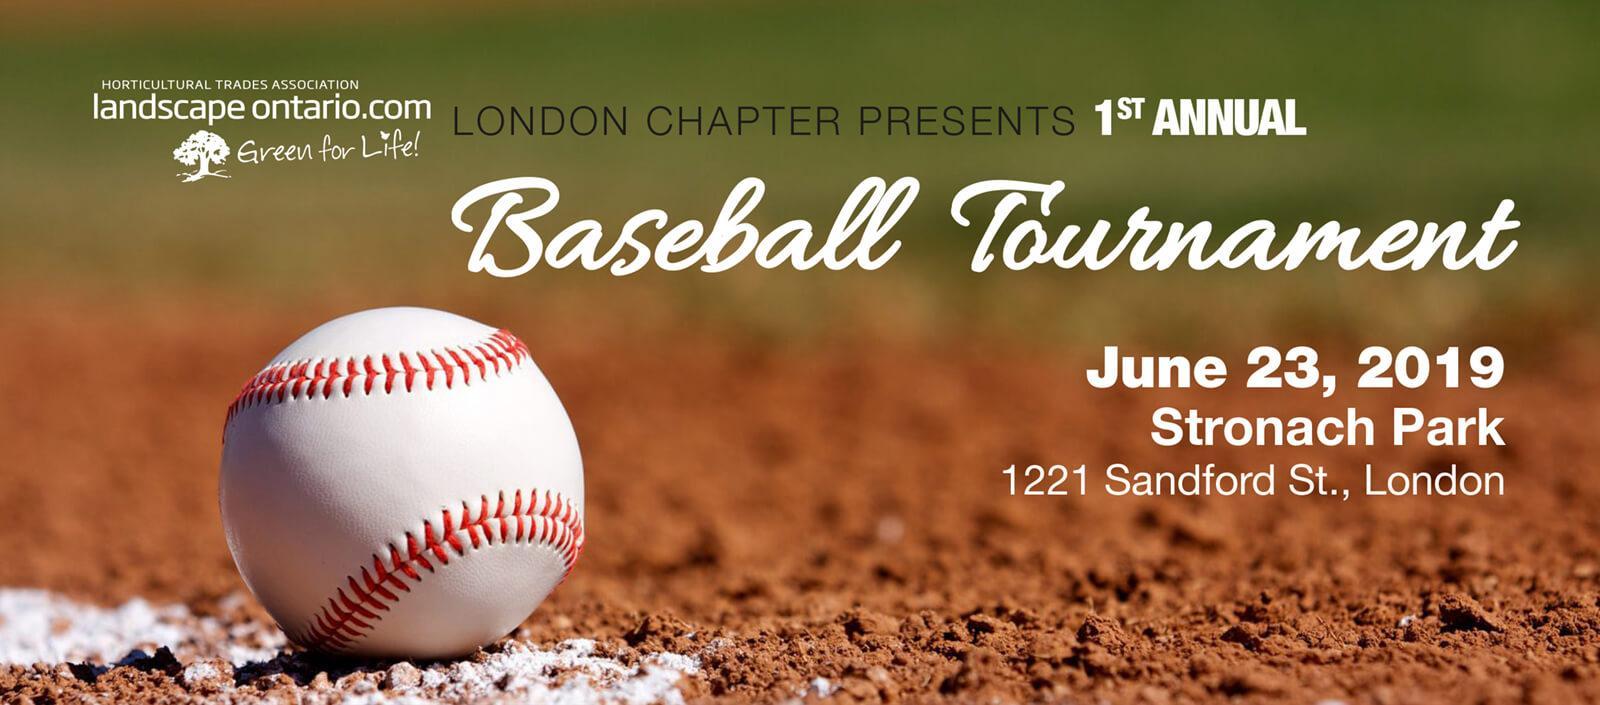 London Chapter Baseball Tournament 2019